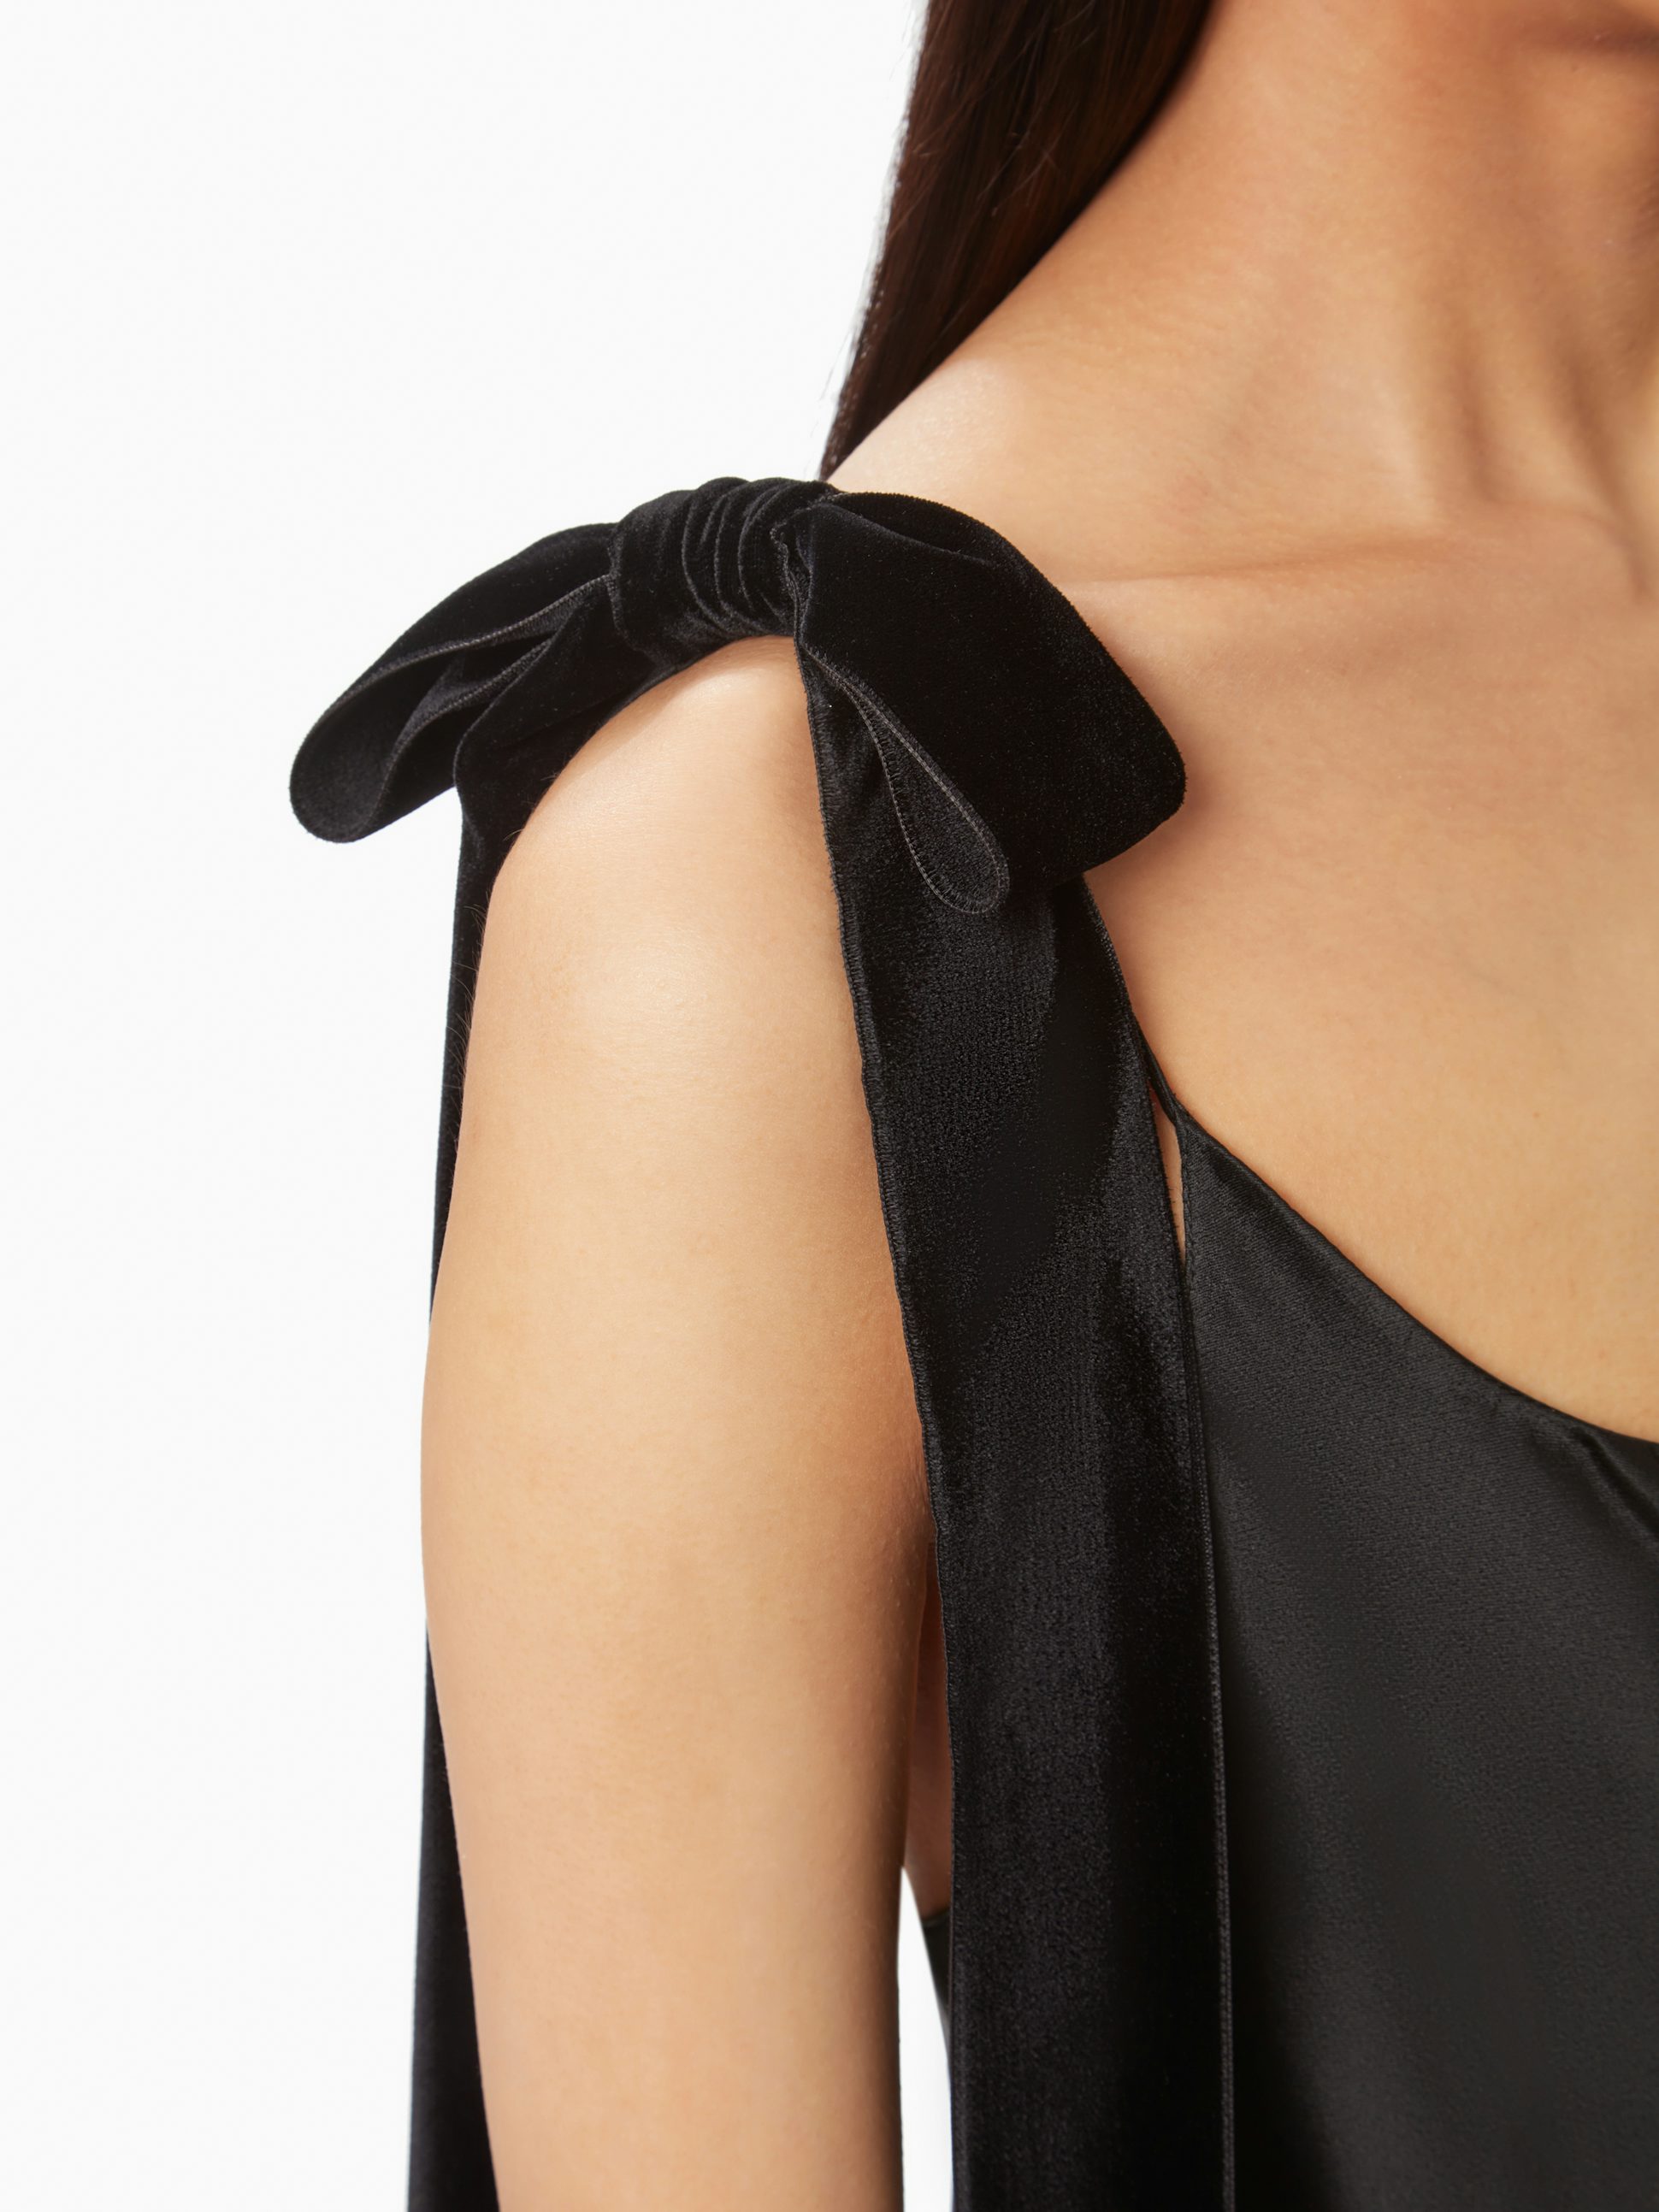 Long satin dress in black - Nina Ricci